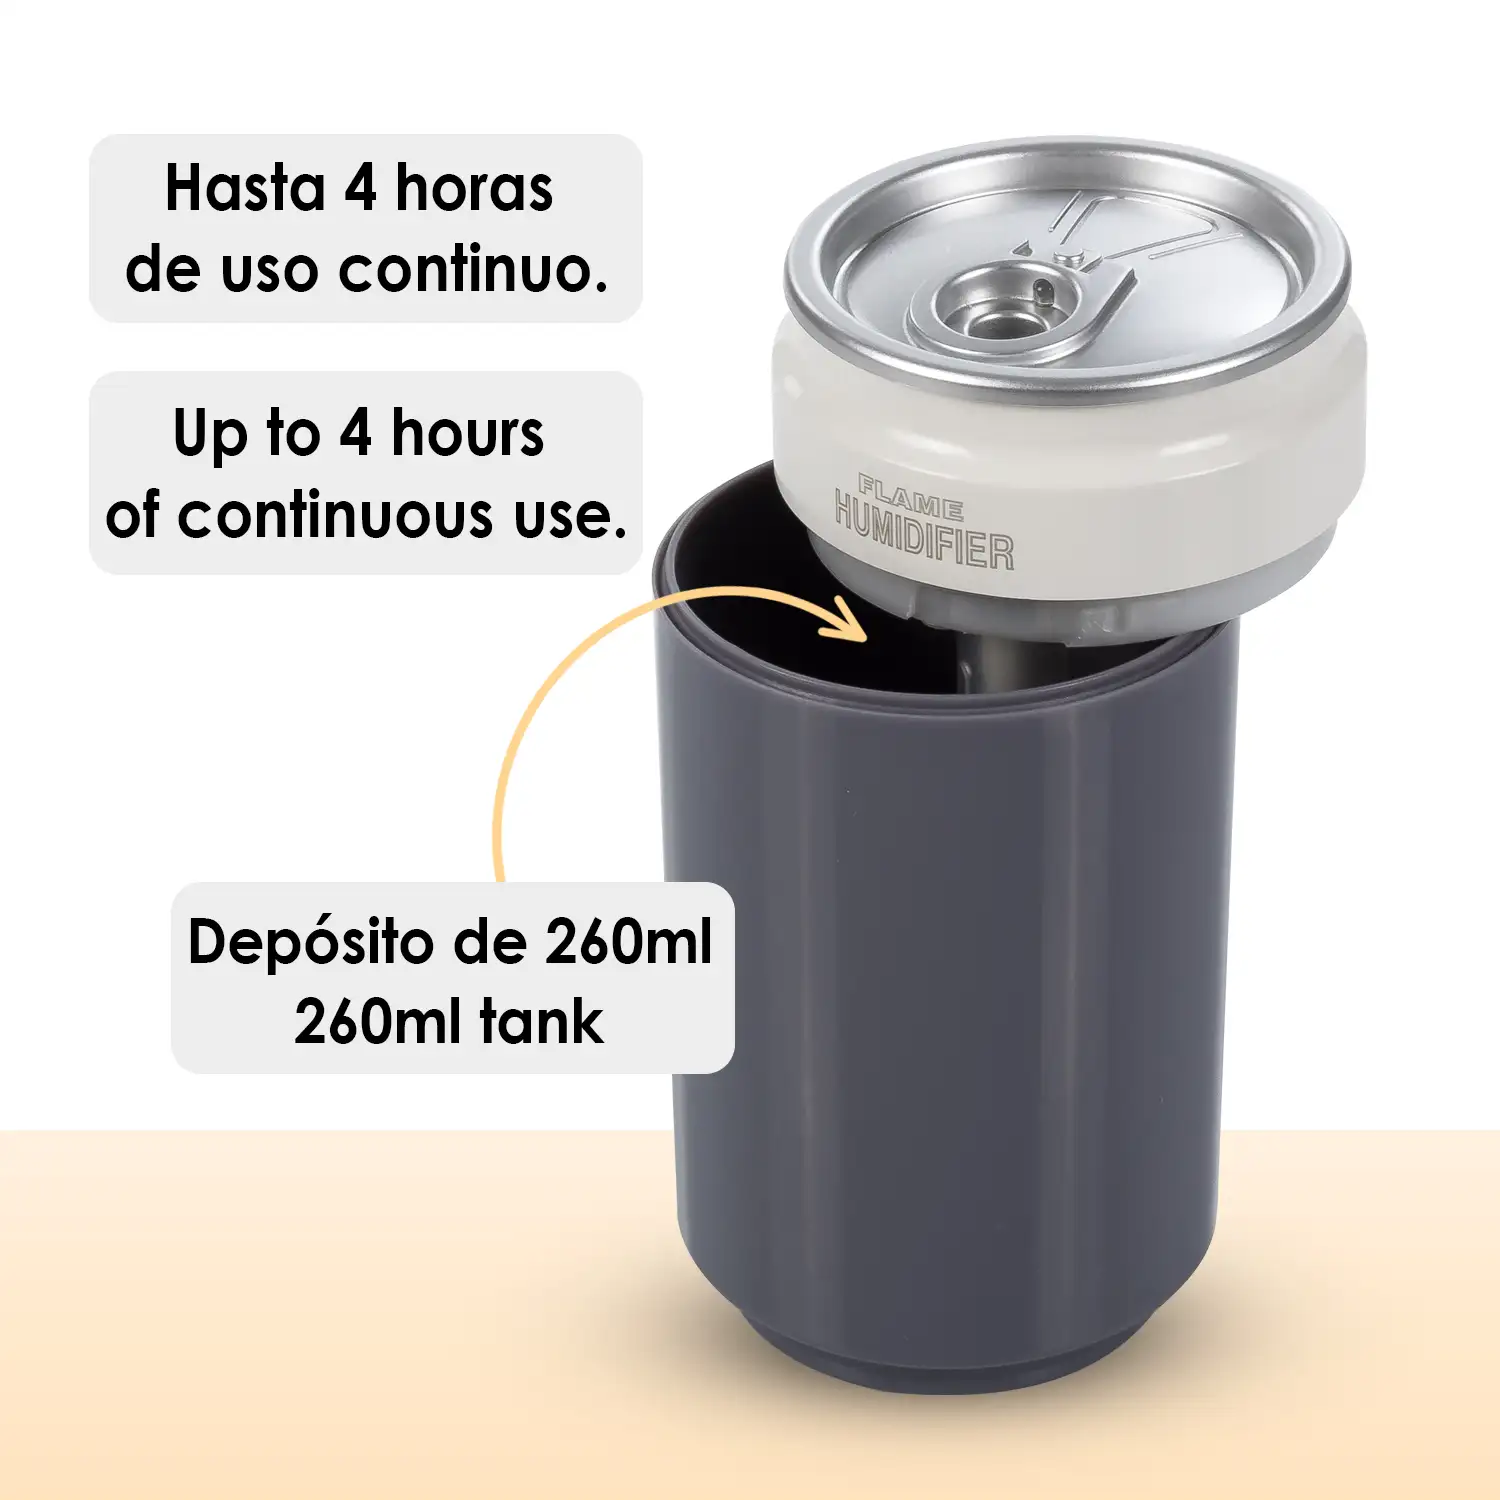 Humidificador multifunción de 260 ml, forma lata de refresco. Función esterilización, compatible con hidroalcohol.